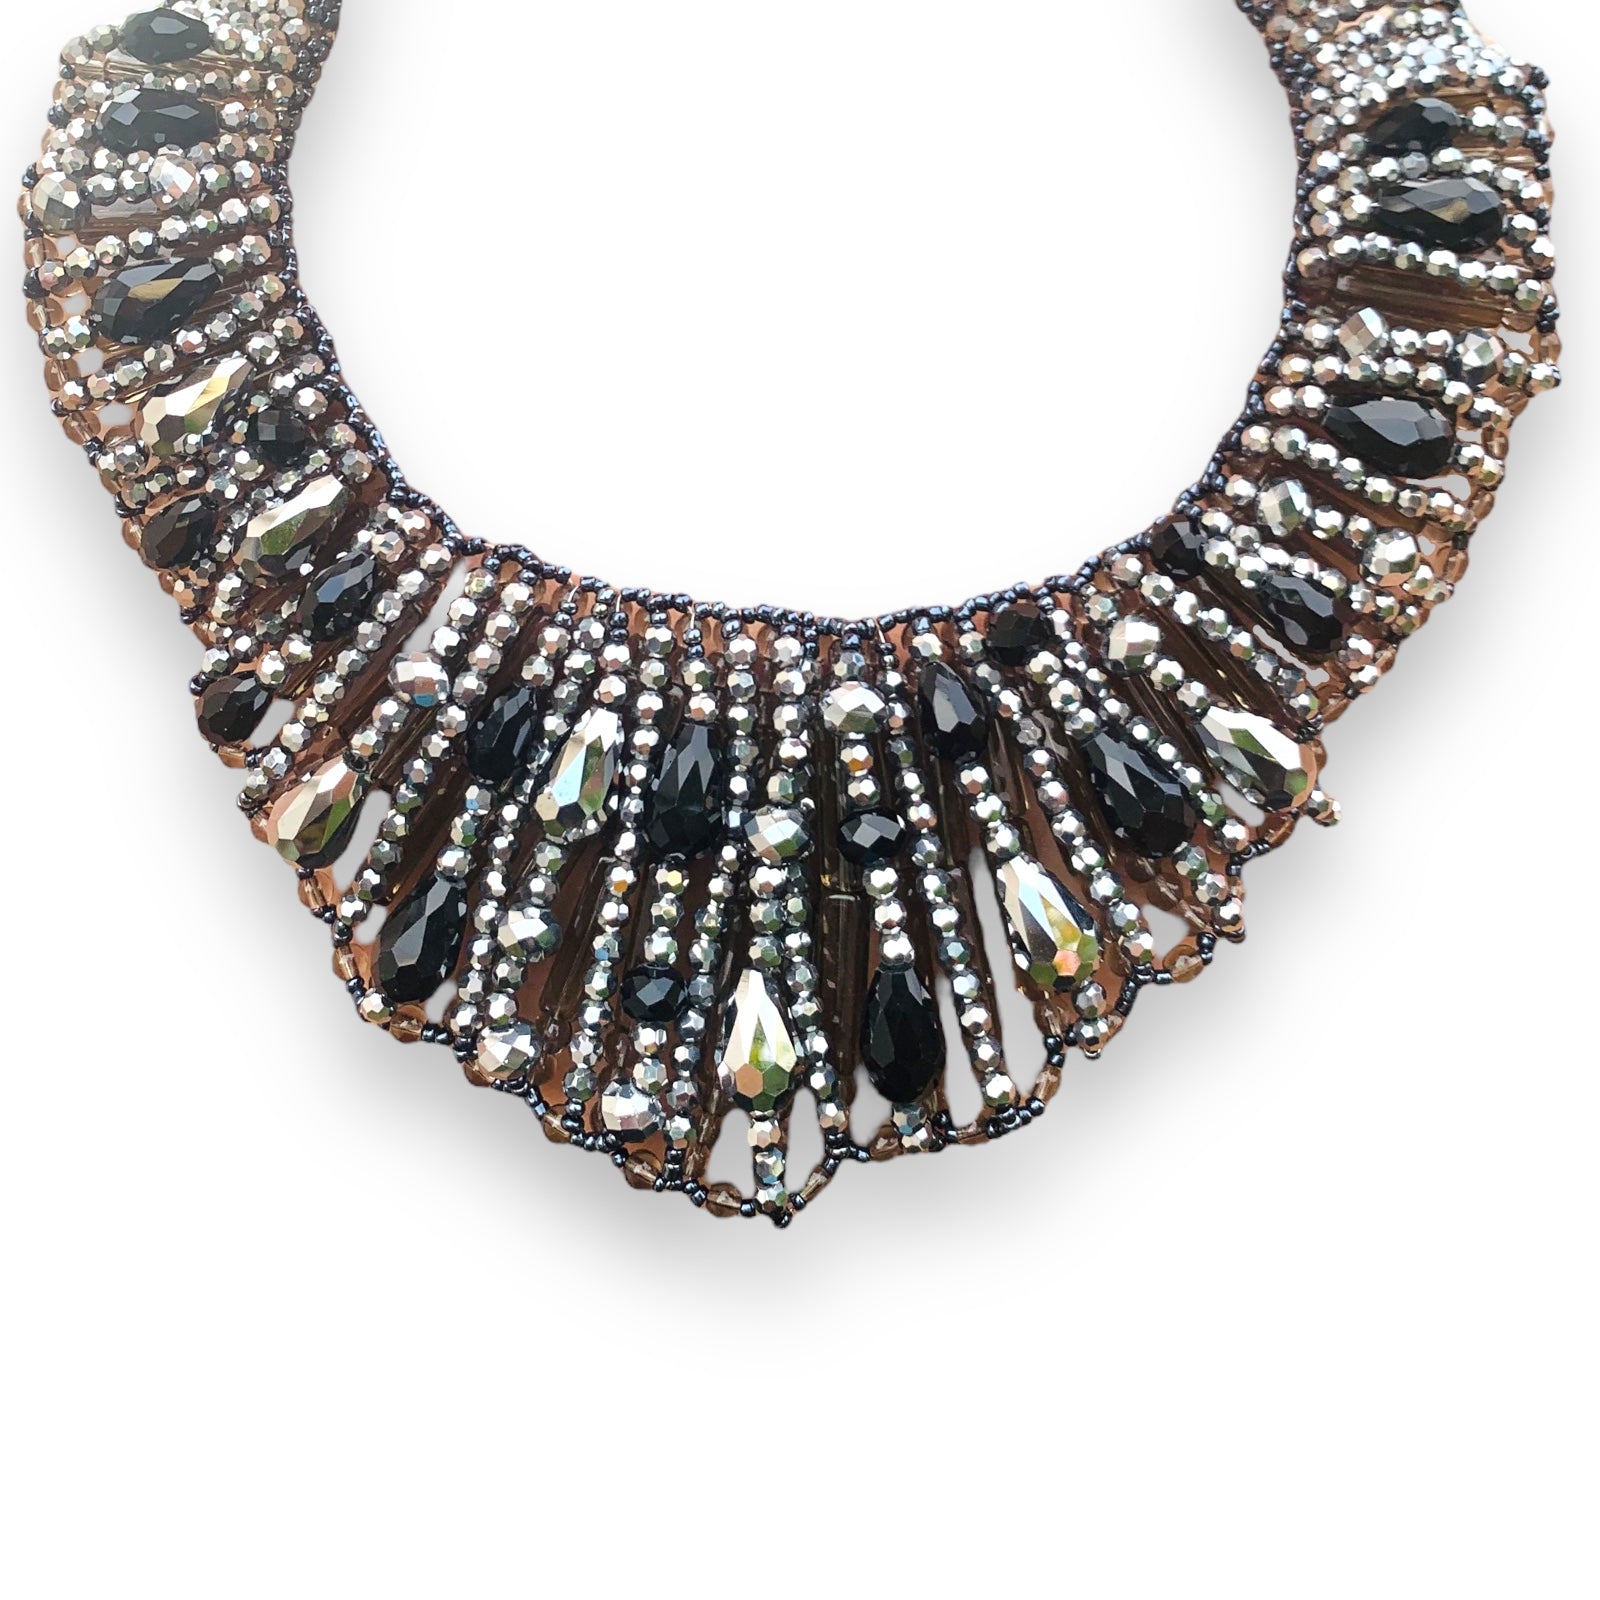 Handmade Neck Wrap 20" Metallic Chic Onyx Hematite Beads Collar Choker Necklace